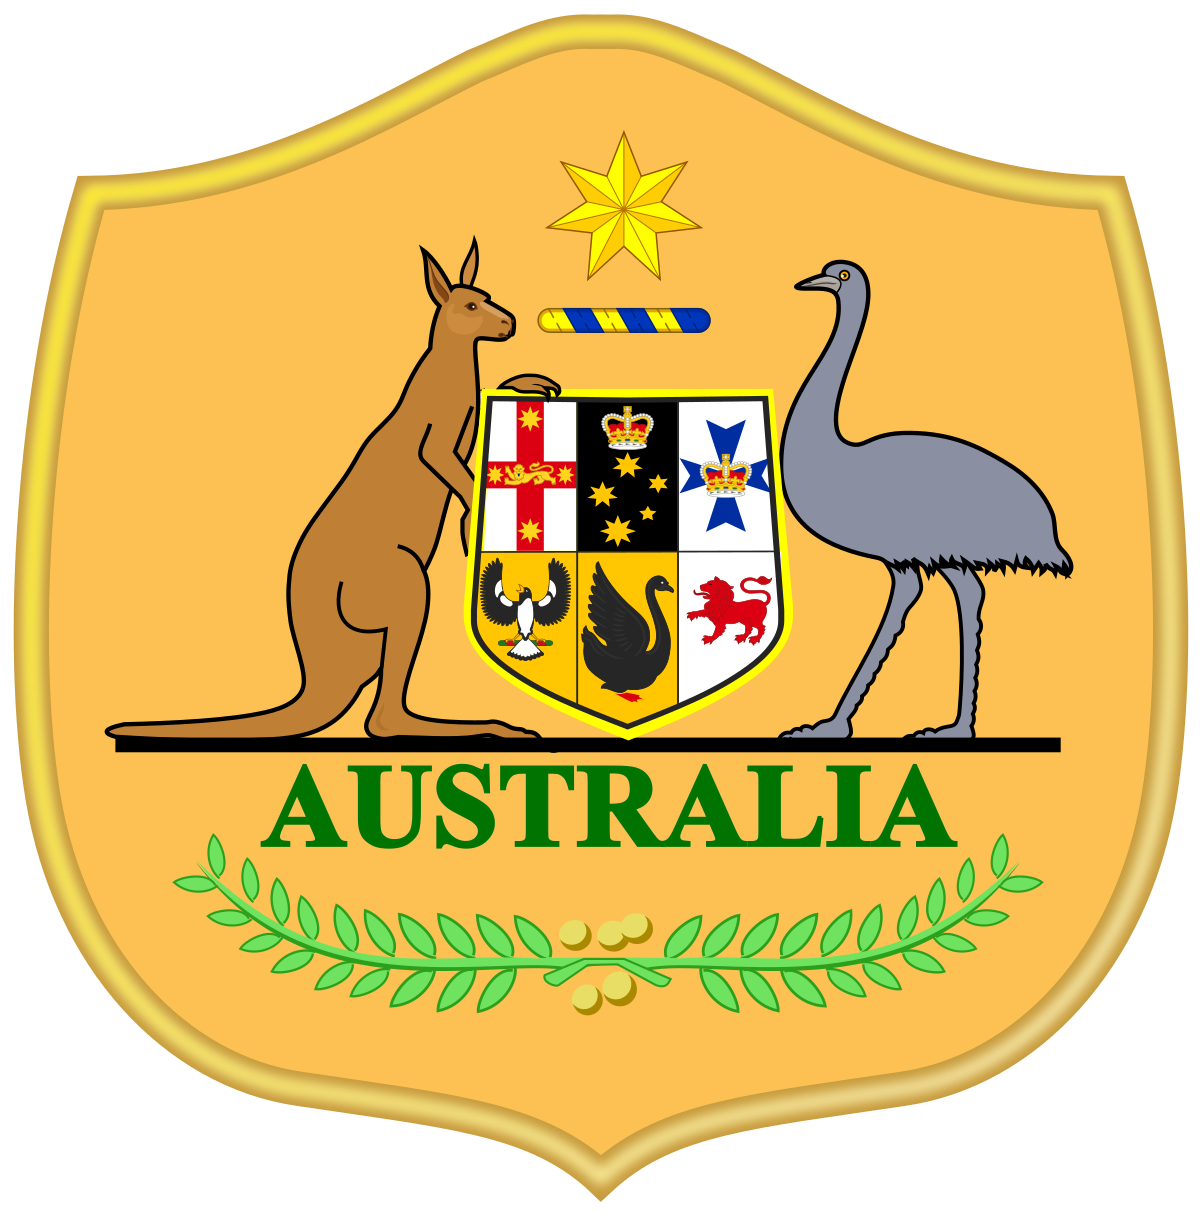 Australia - soccerdeal